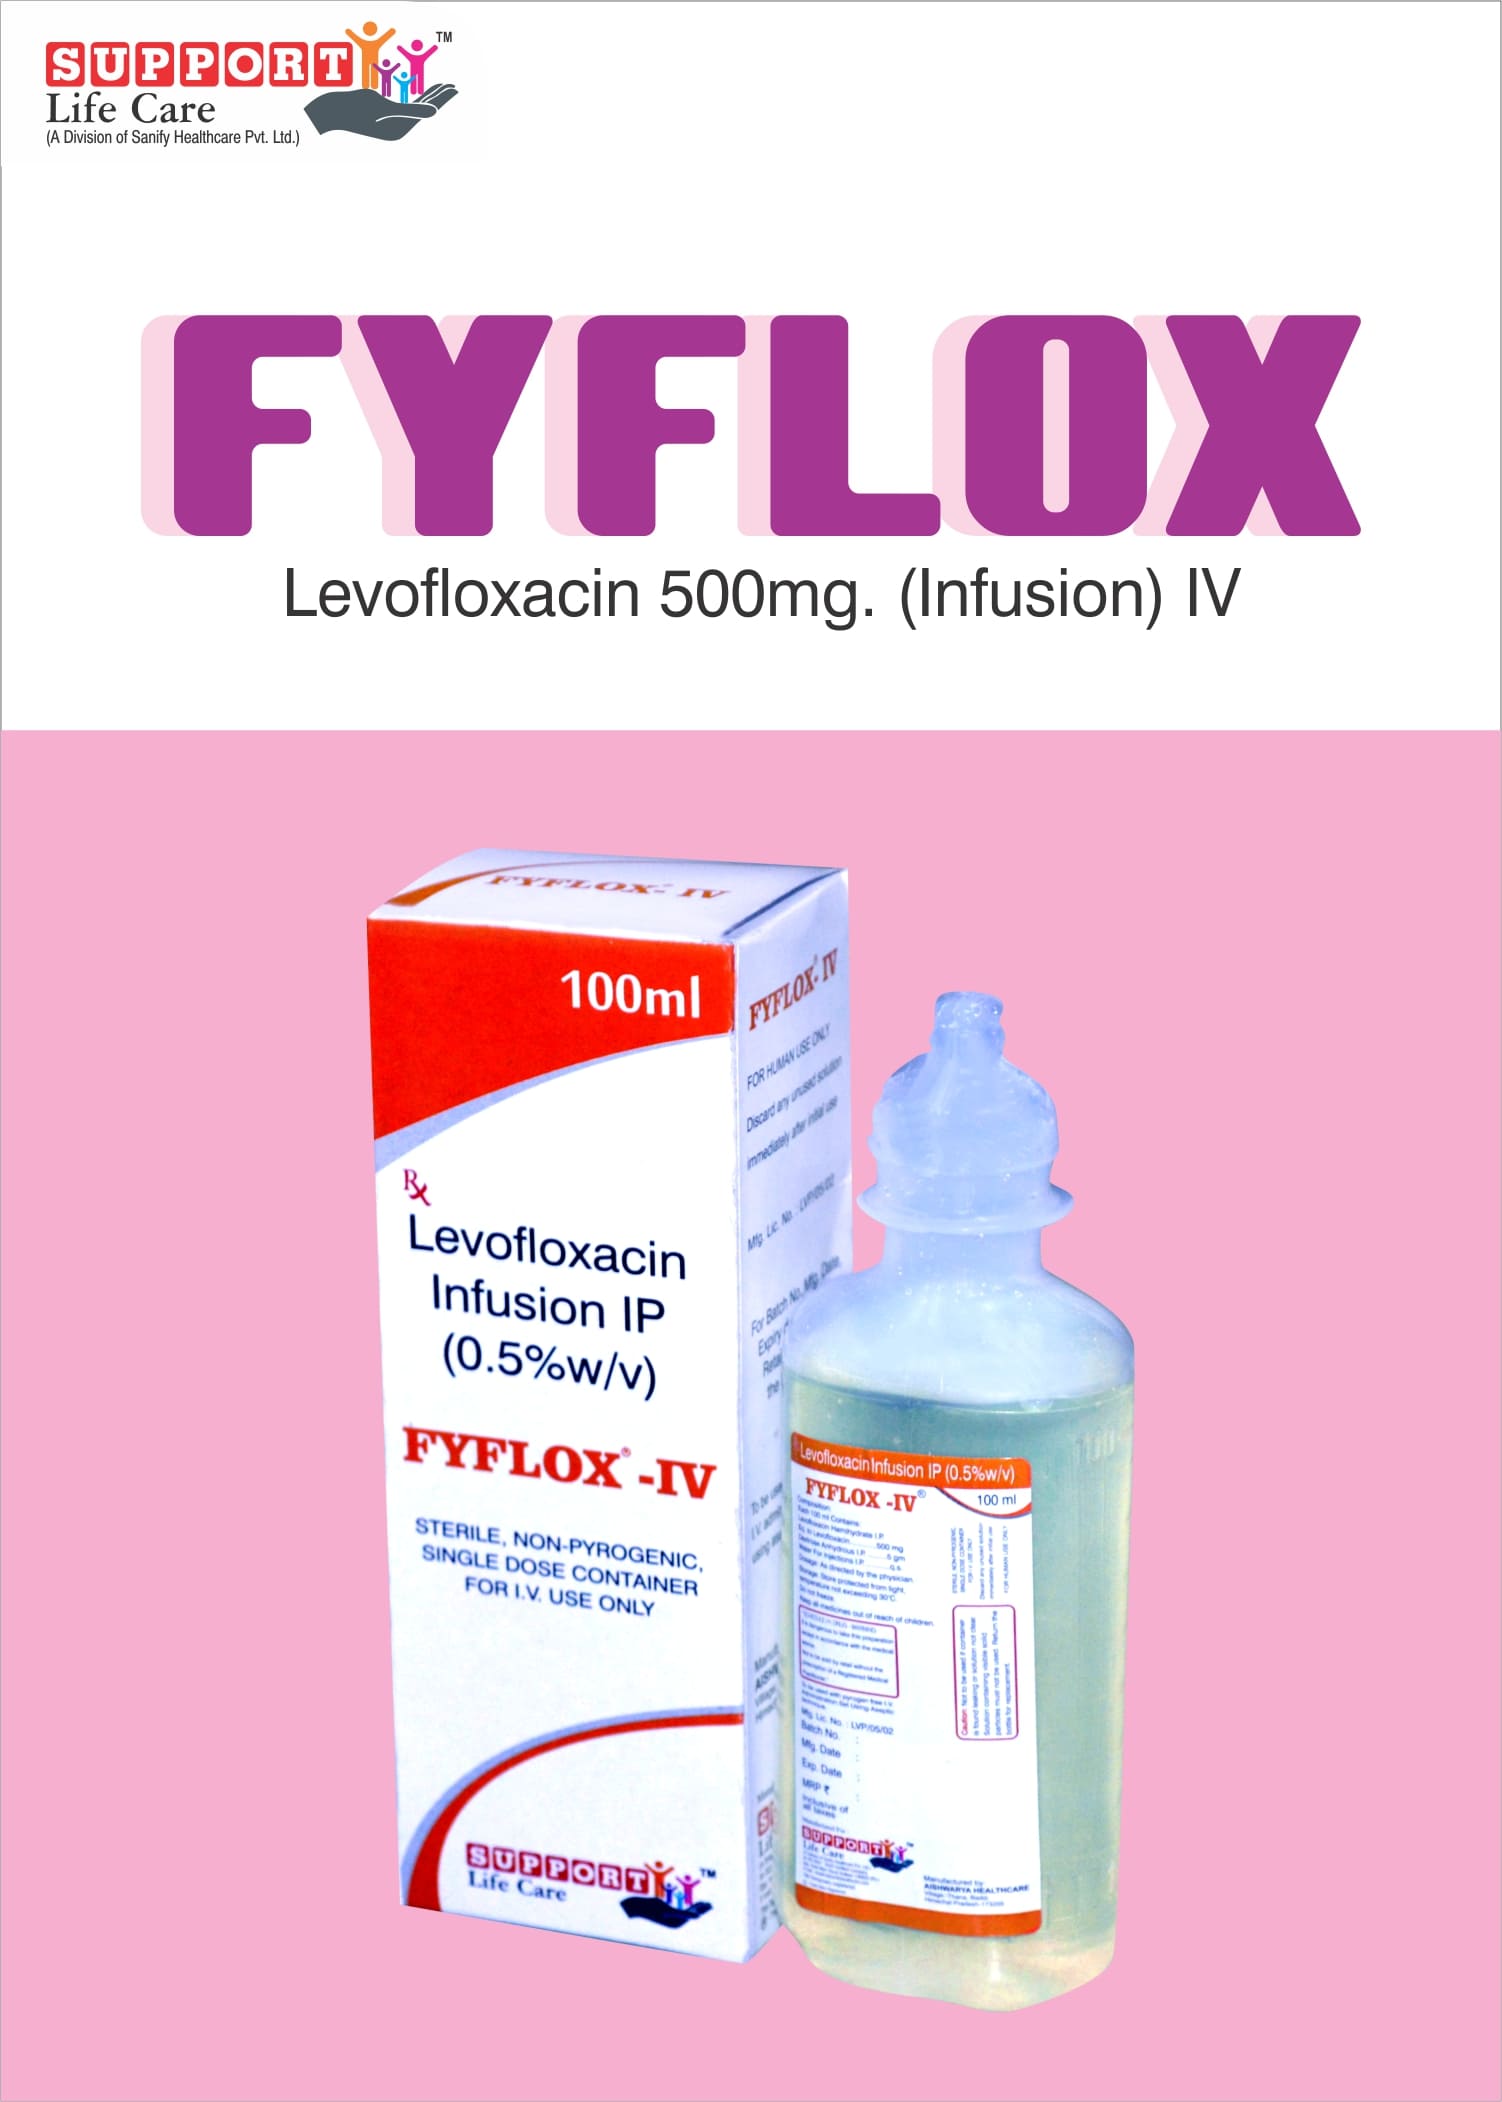 Levofloxacin 500mg + Sodium Cl. 900mg